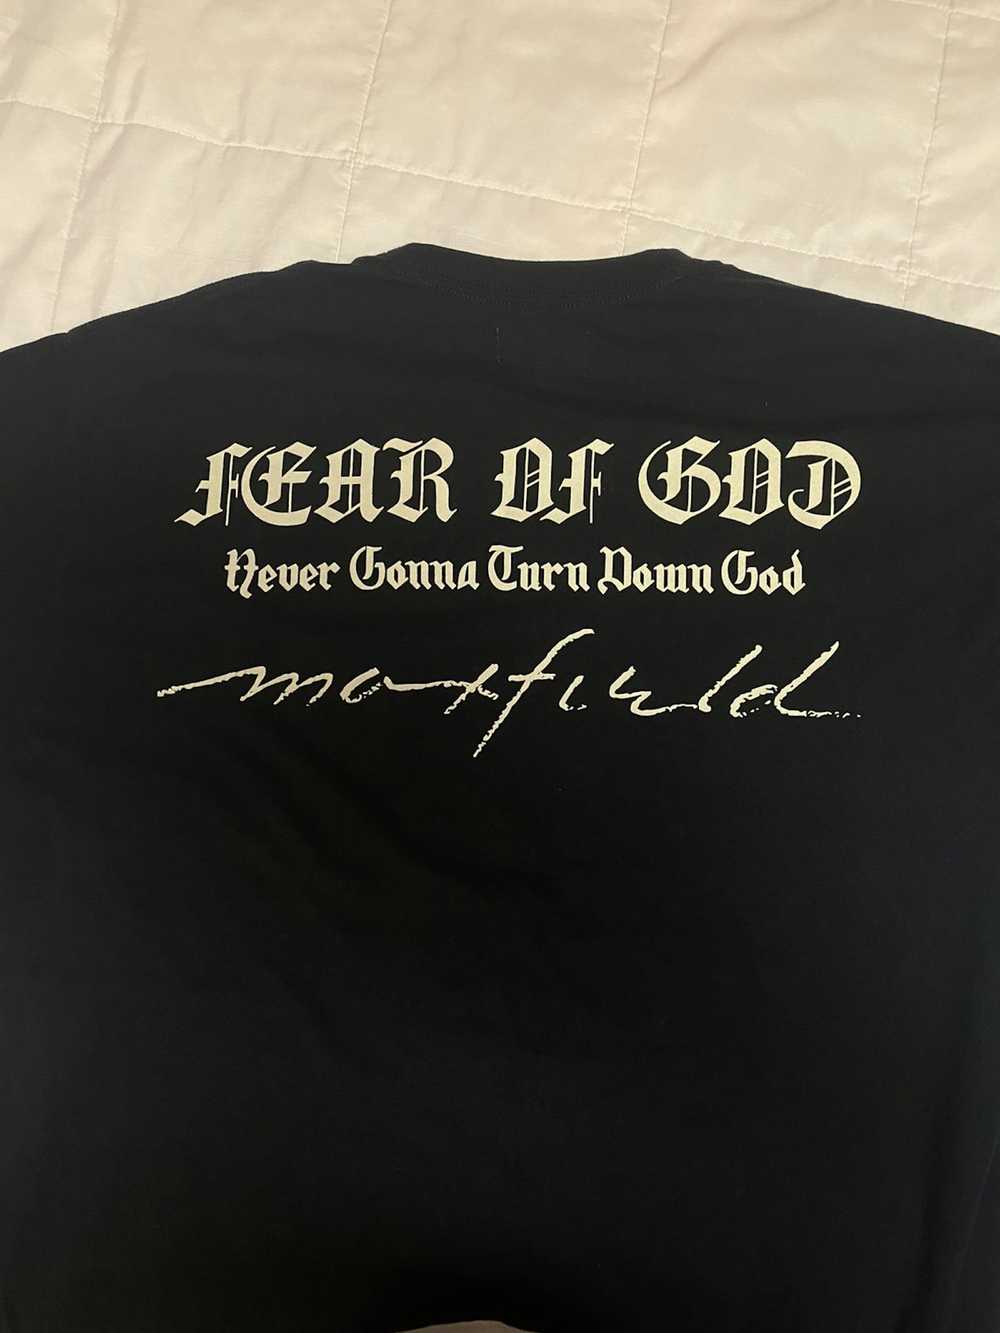 Fear of God Maxfield LS shirt - image 2